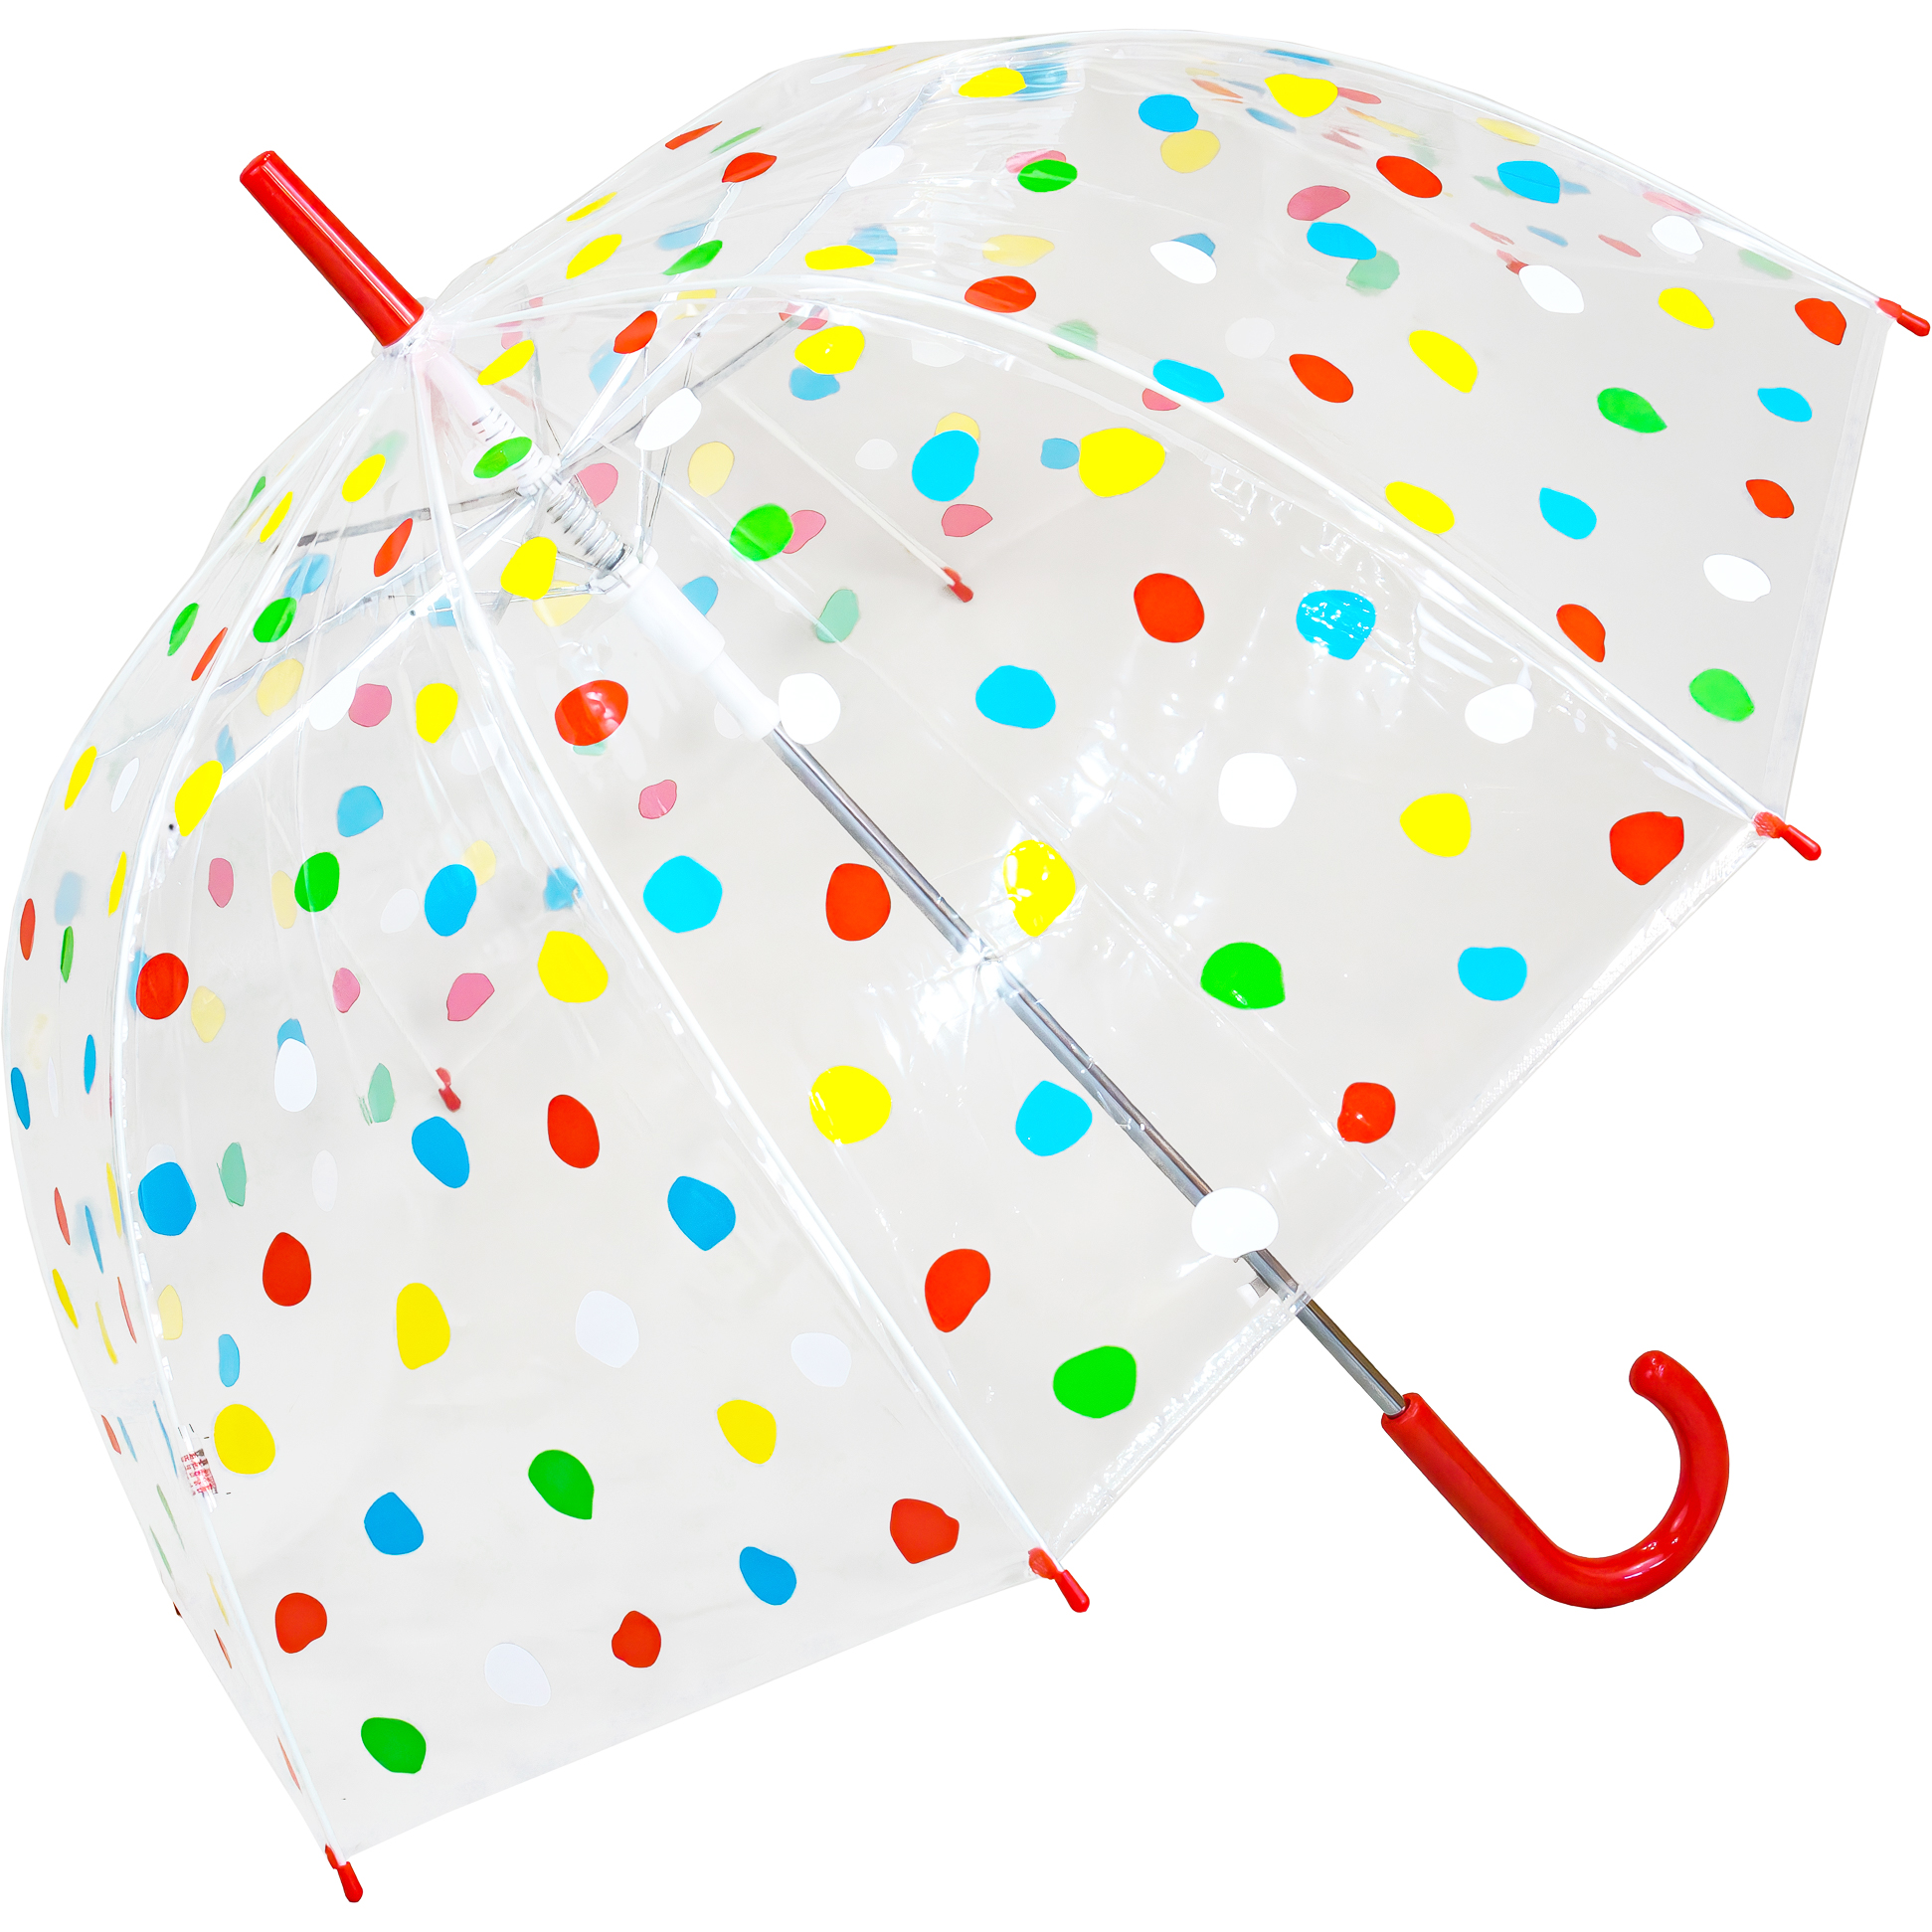 Bright Polka Dot Print Dome Umbrella (18047R)